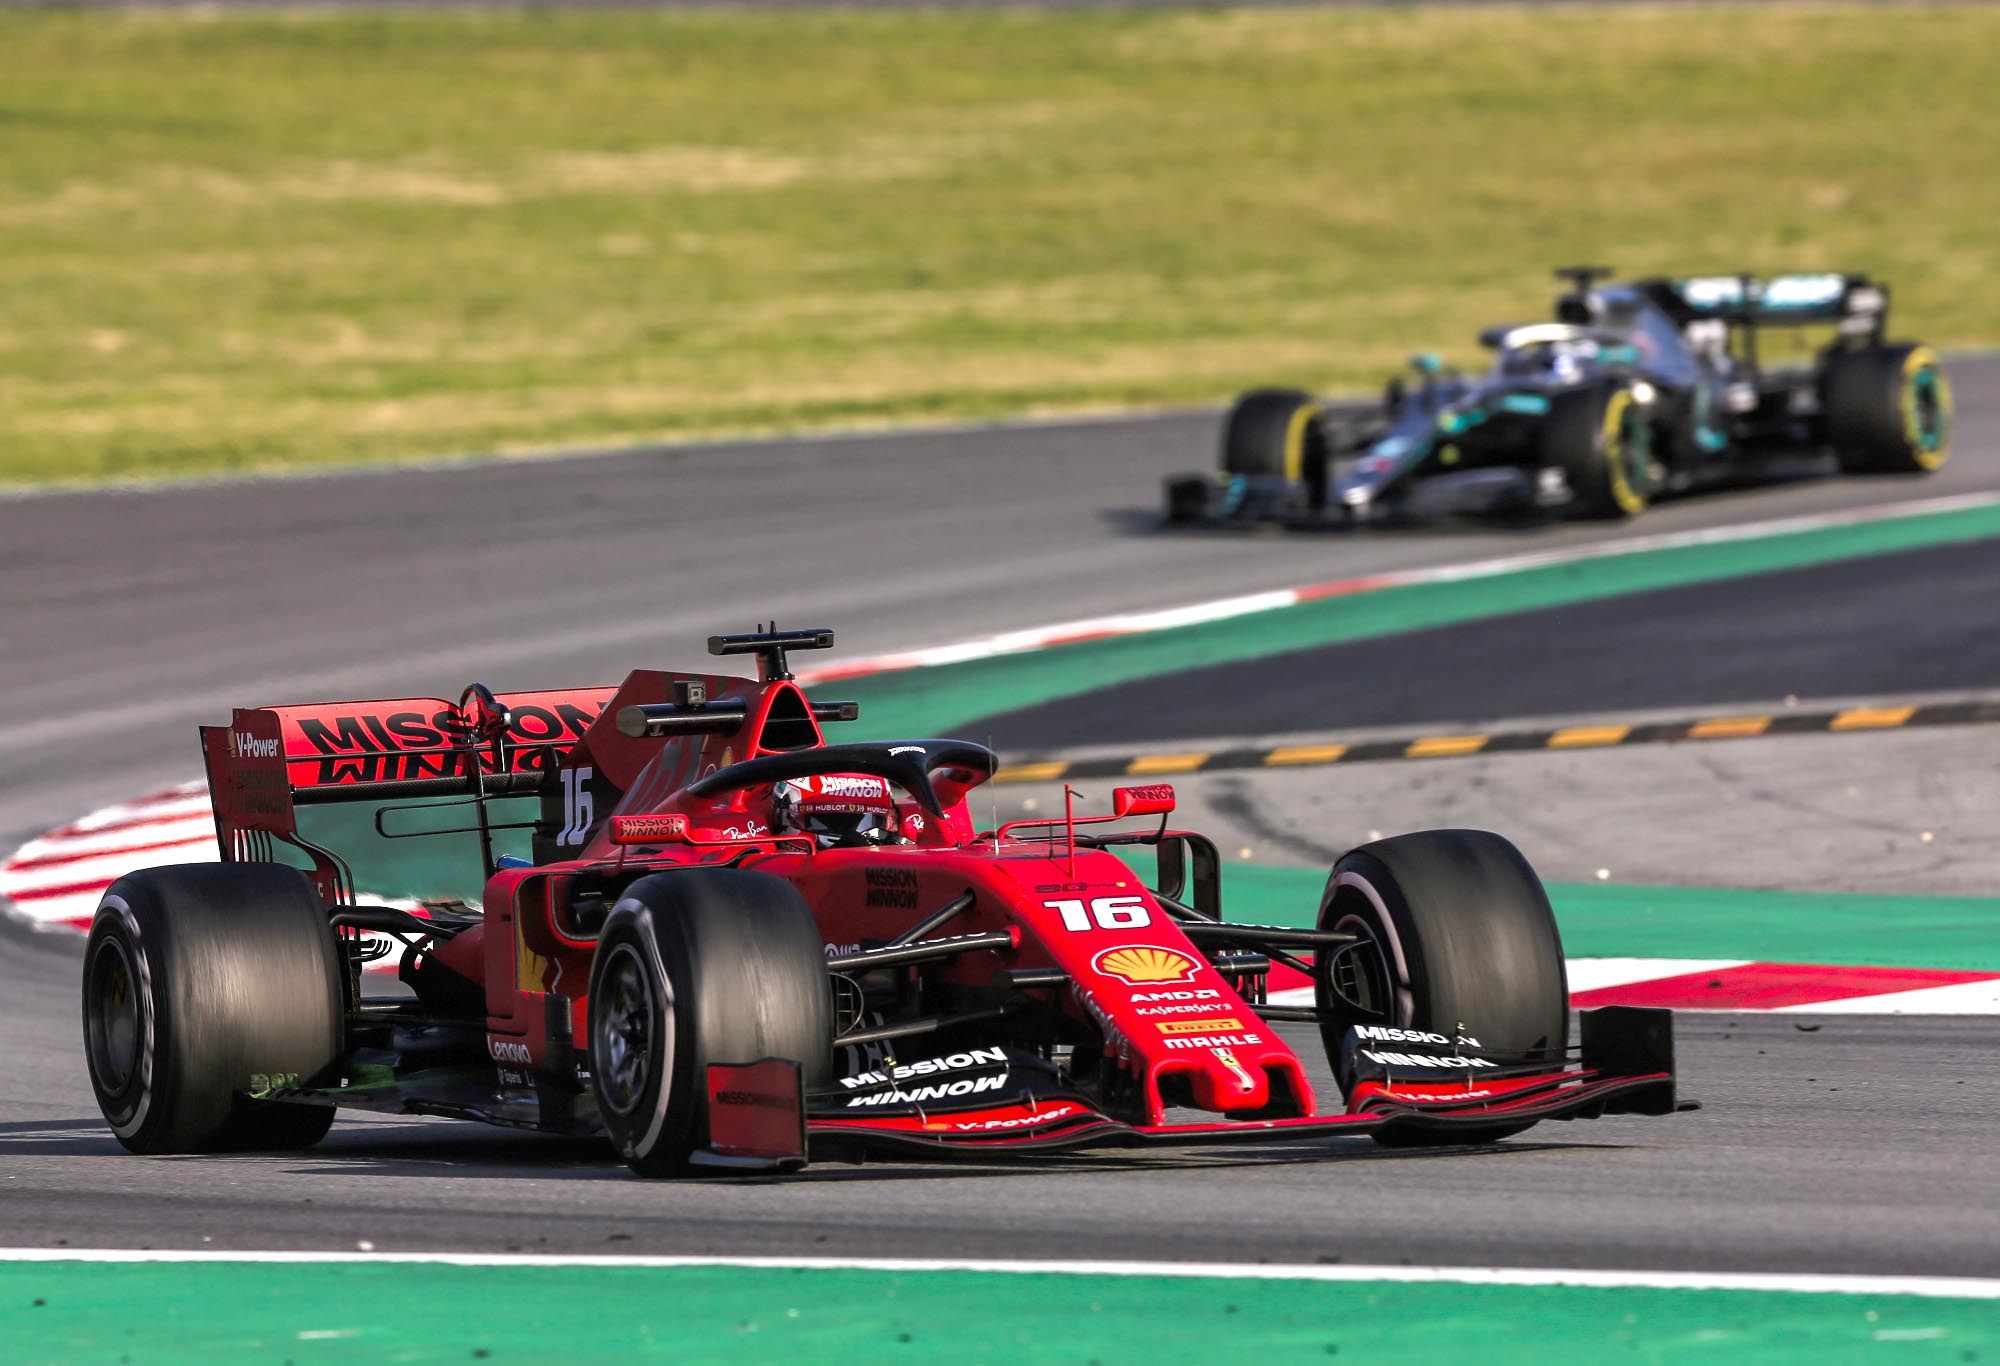 Ferrari's Charles Leclerc is followed on-track by Mercedes's Valtteri Bottas.